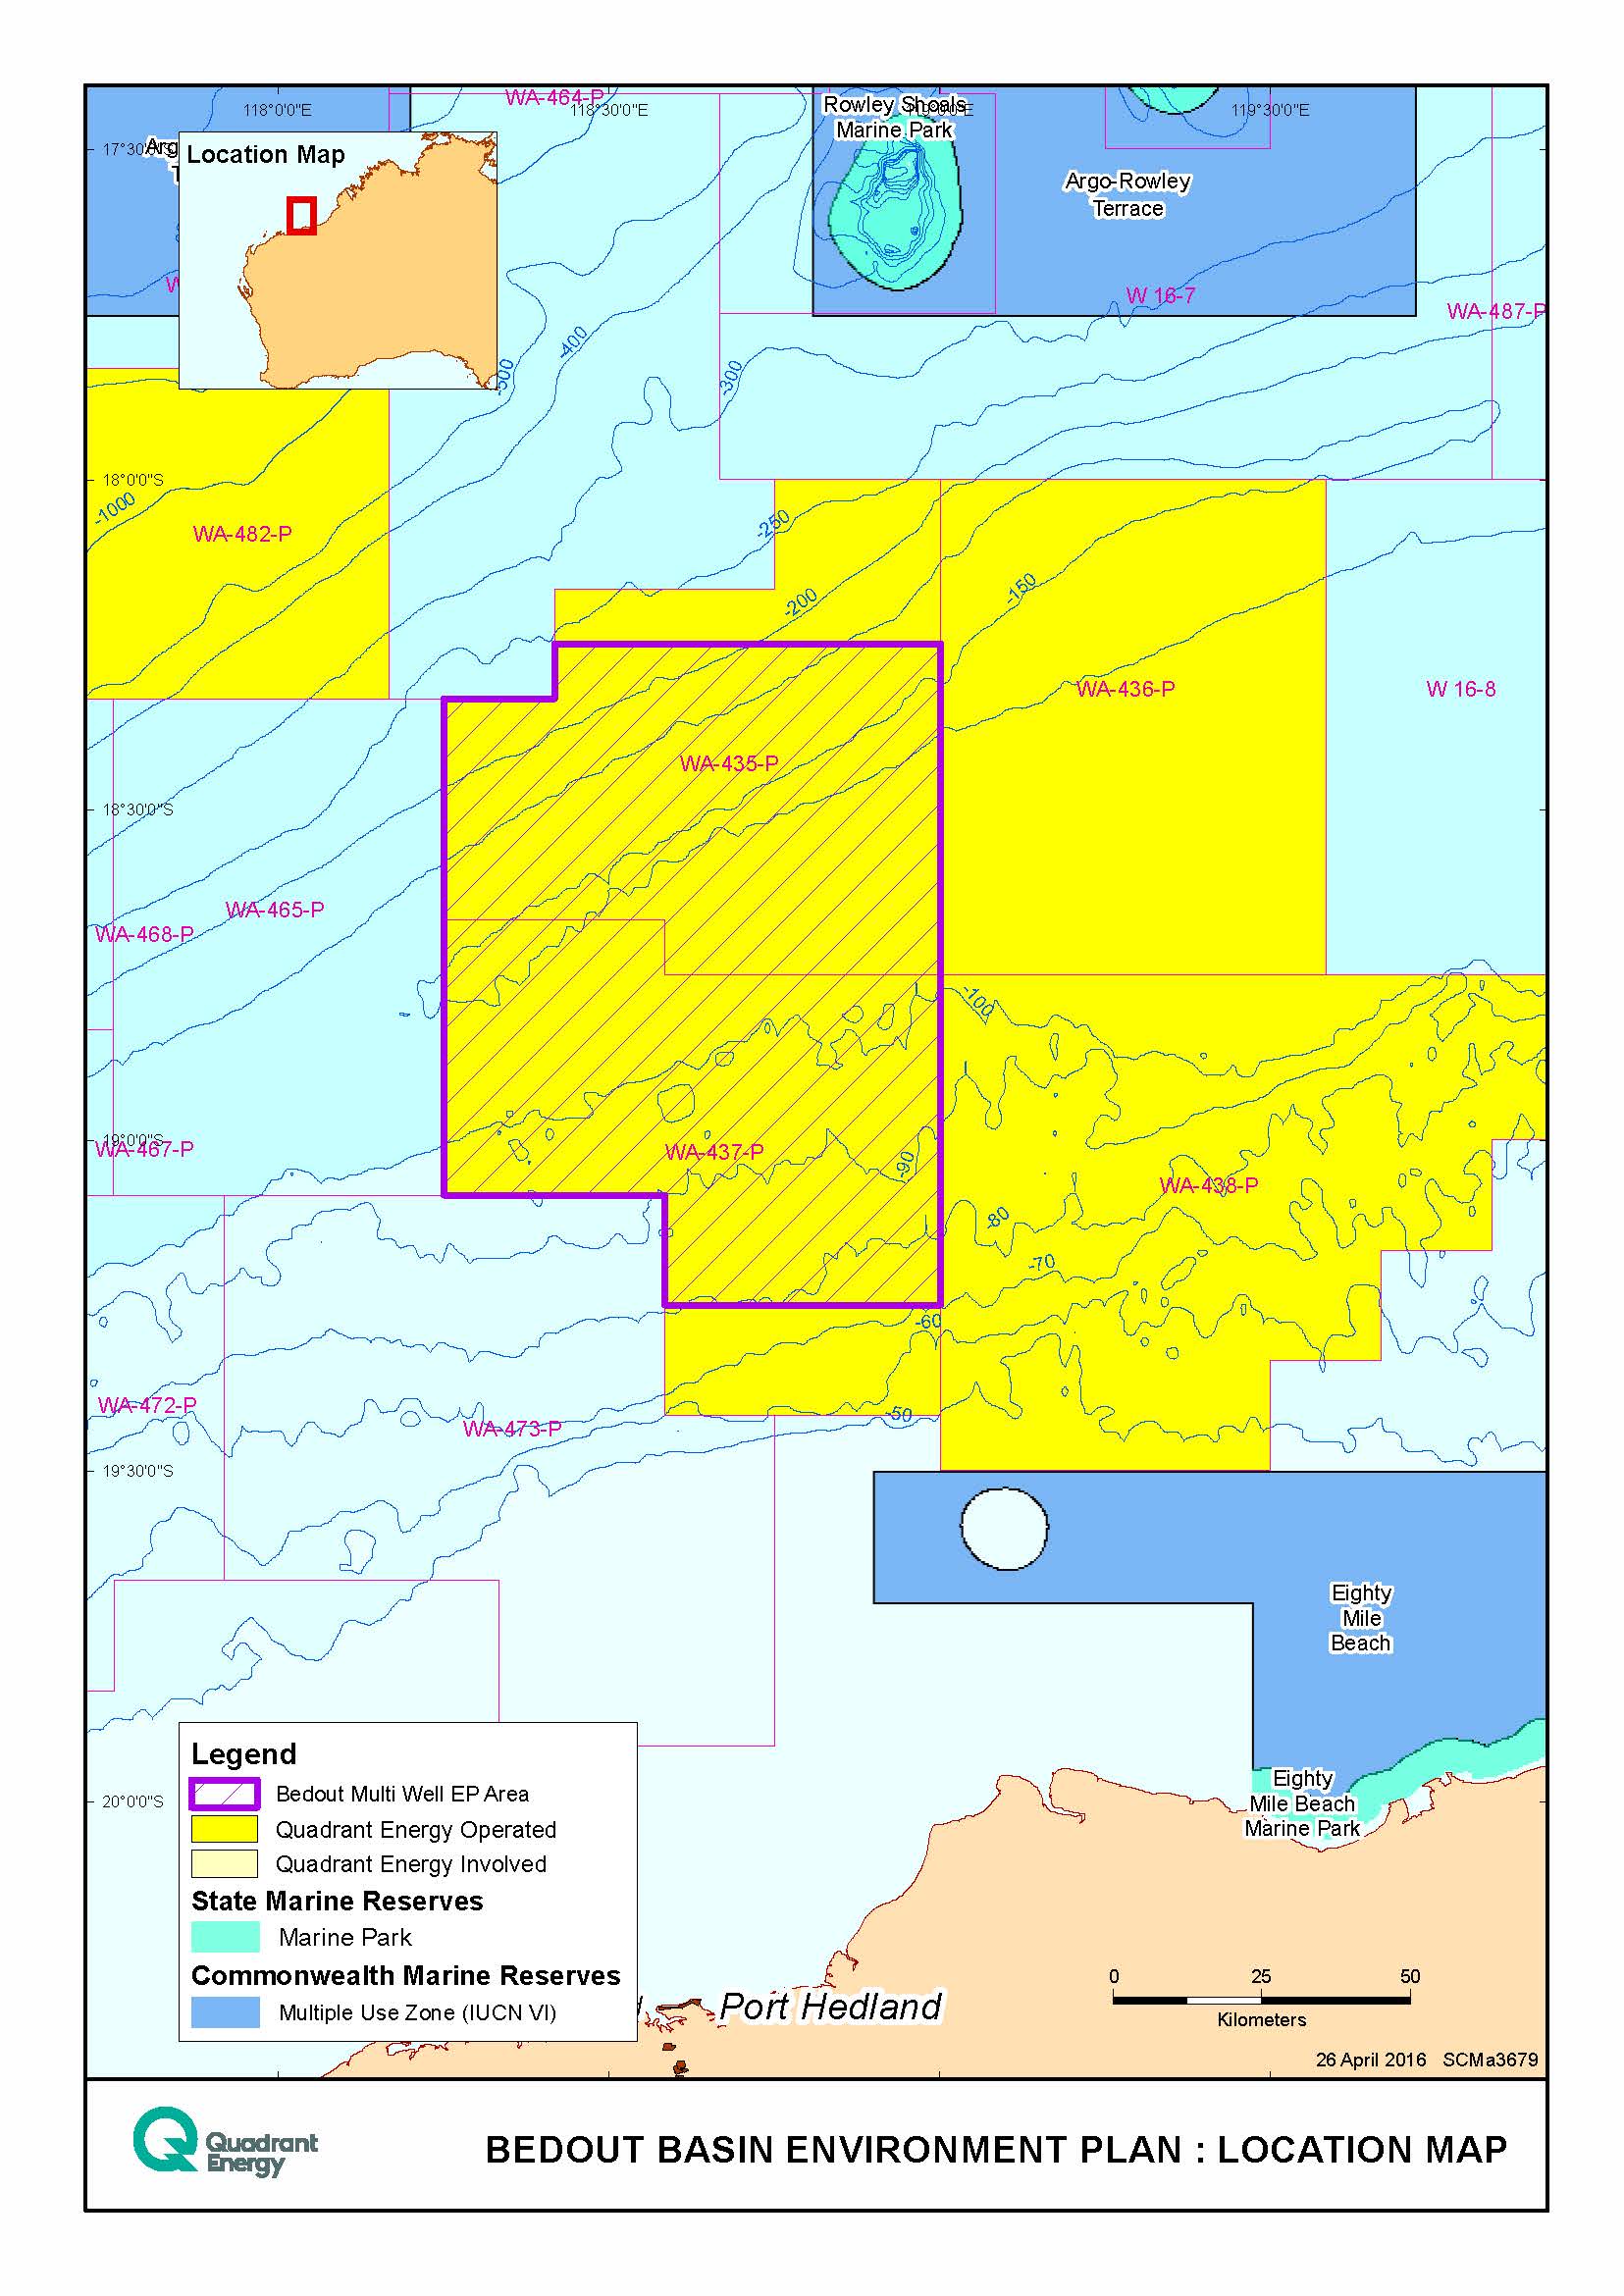 Location map - Activity: Bedout Basin Exploration & Appraisal Drilling (refer to description)